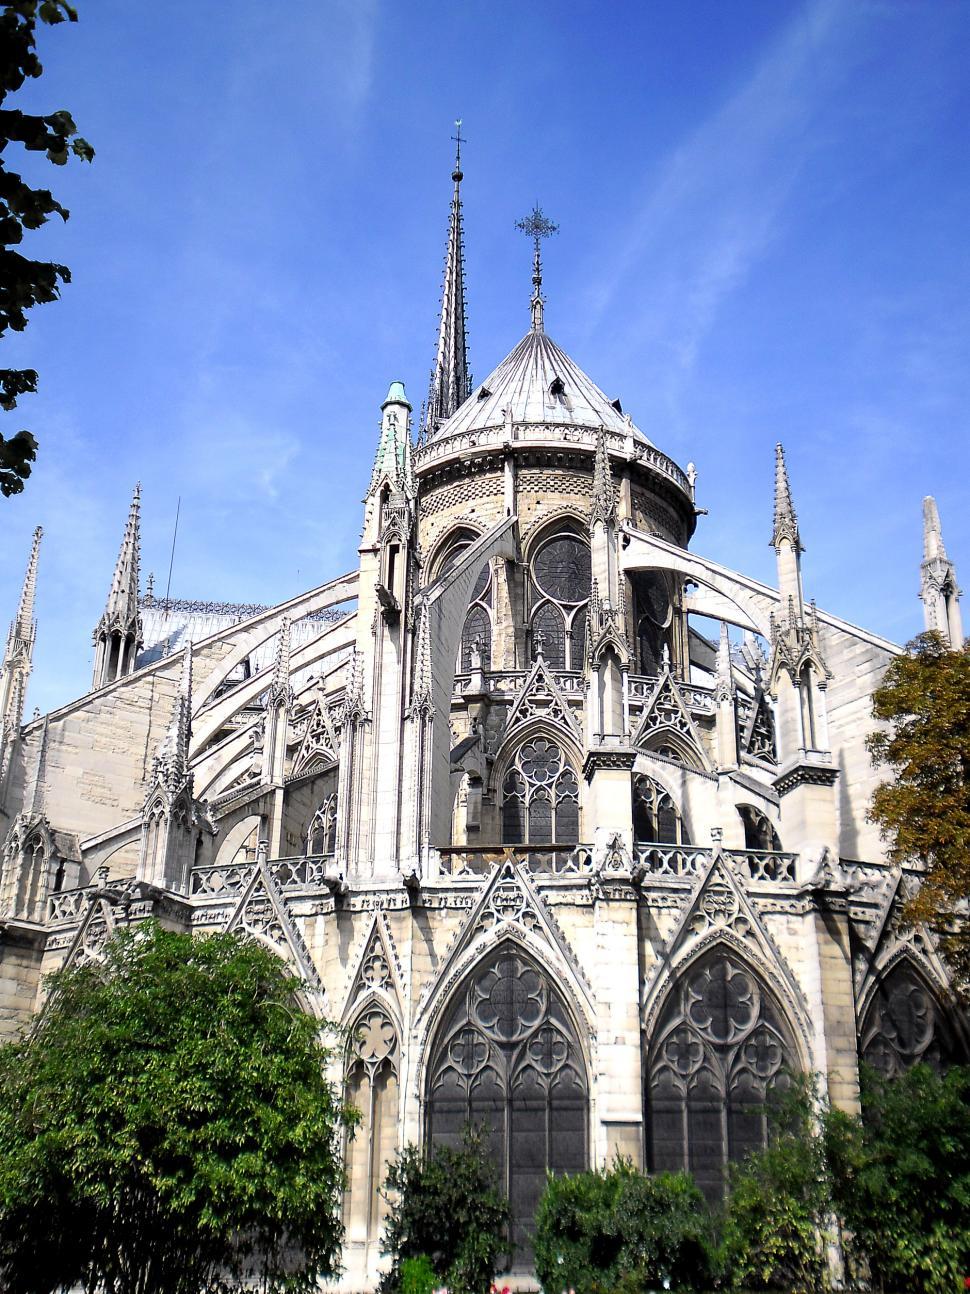 Free Image of Cathedral of Notre Dame de Paris 